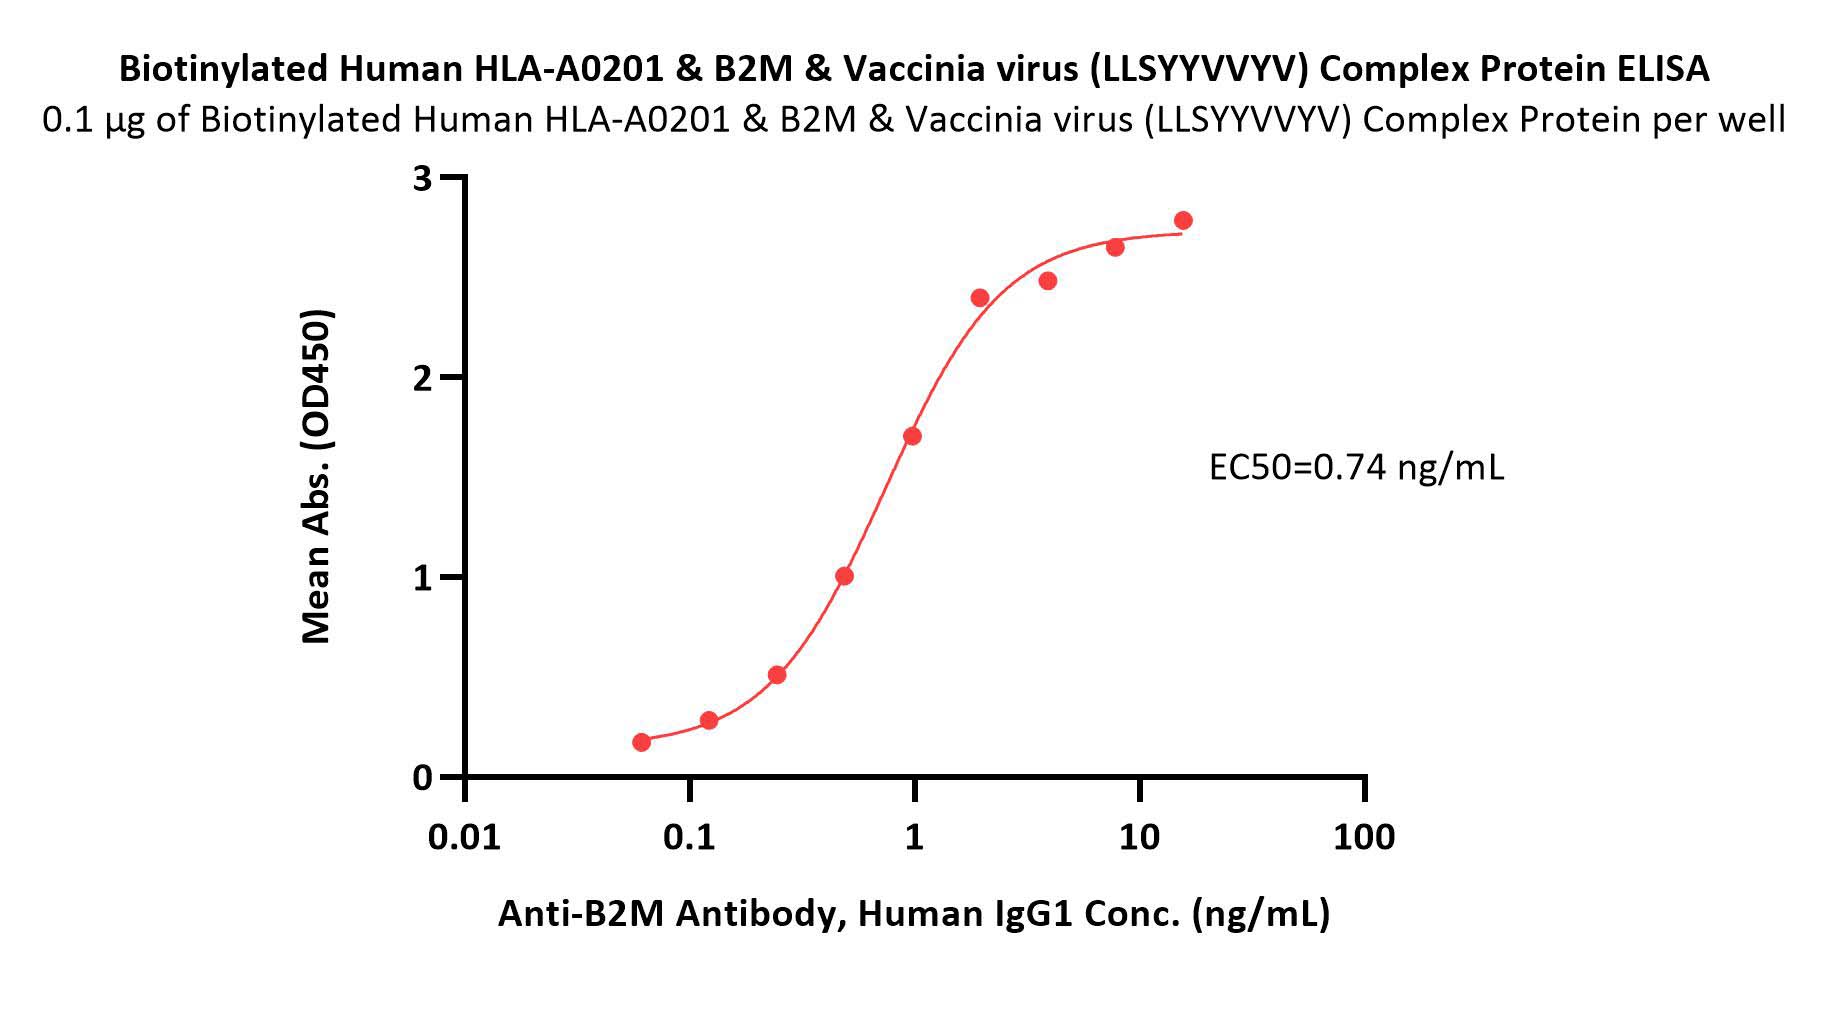 HLA-A*0201 & B2M & Vaccinia virus (LLSYYVVYV) ELISA